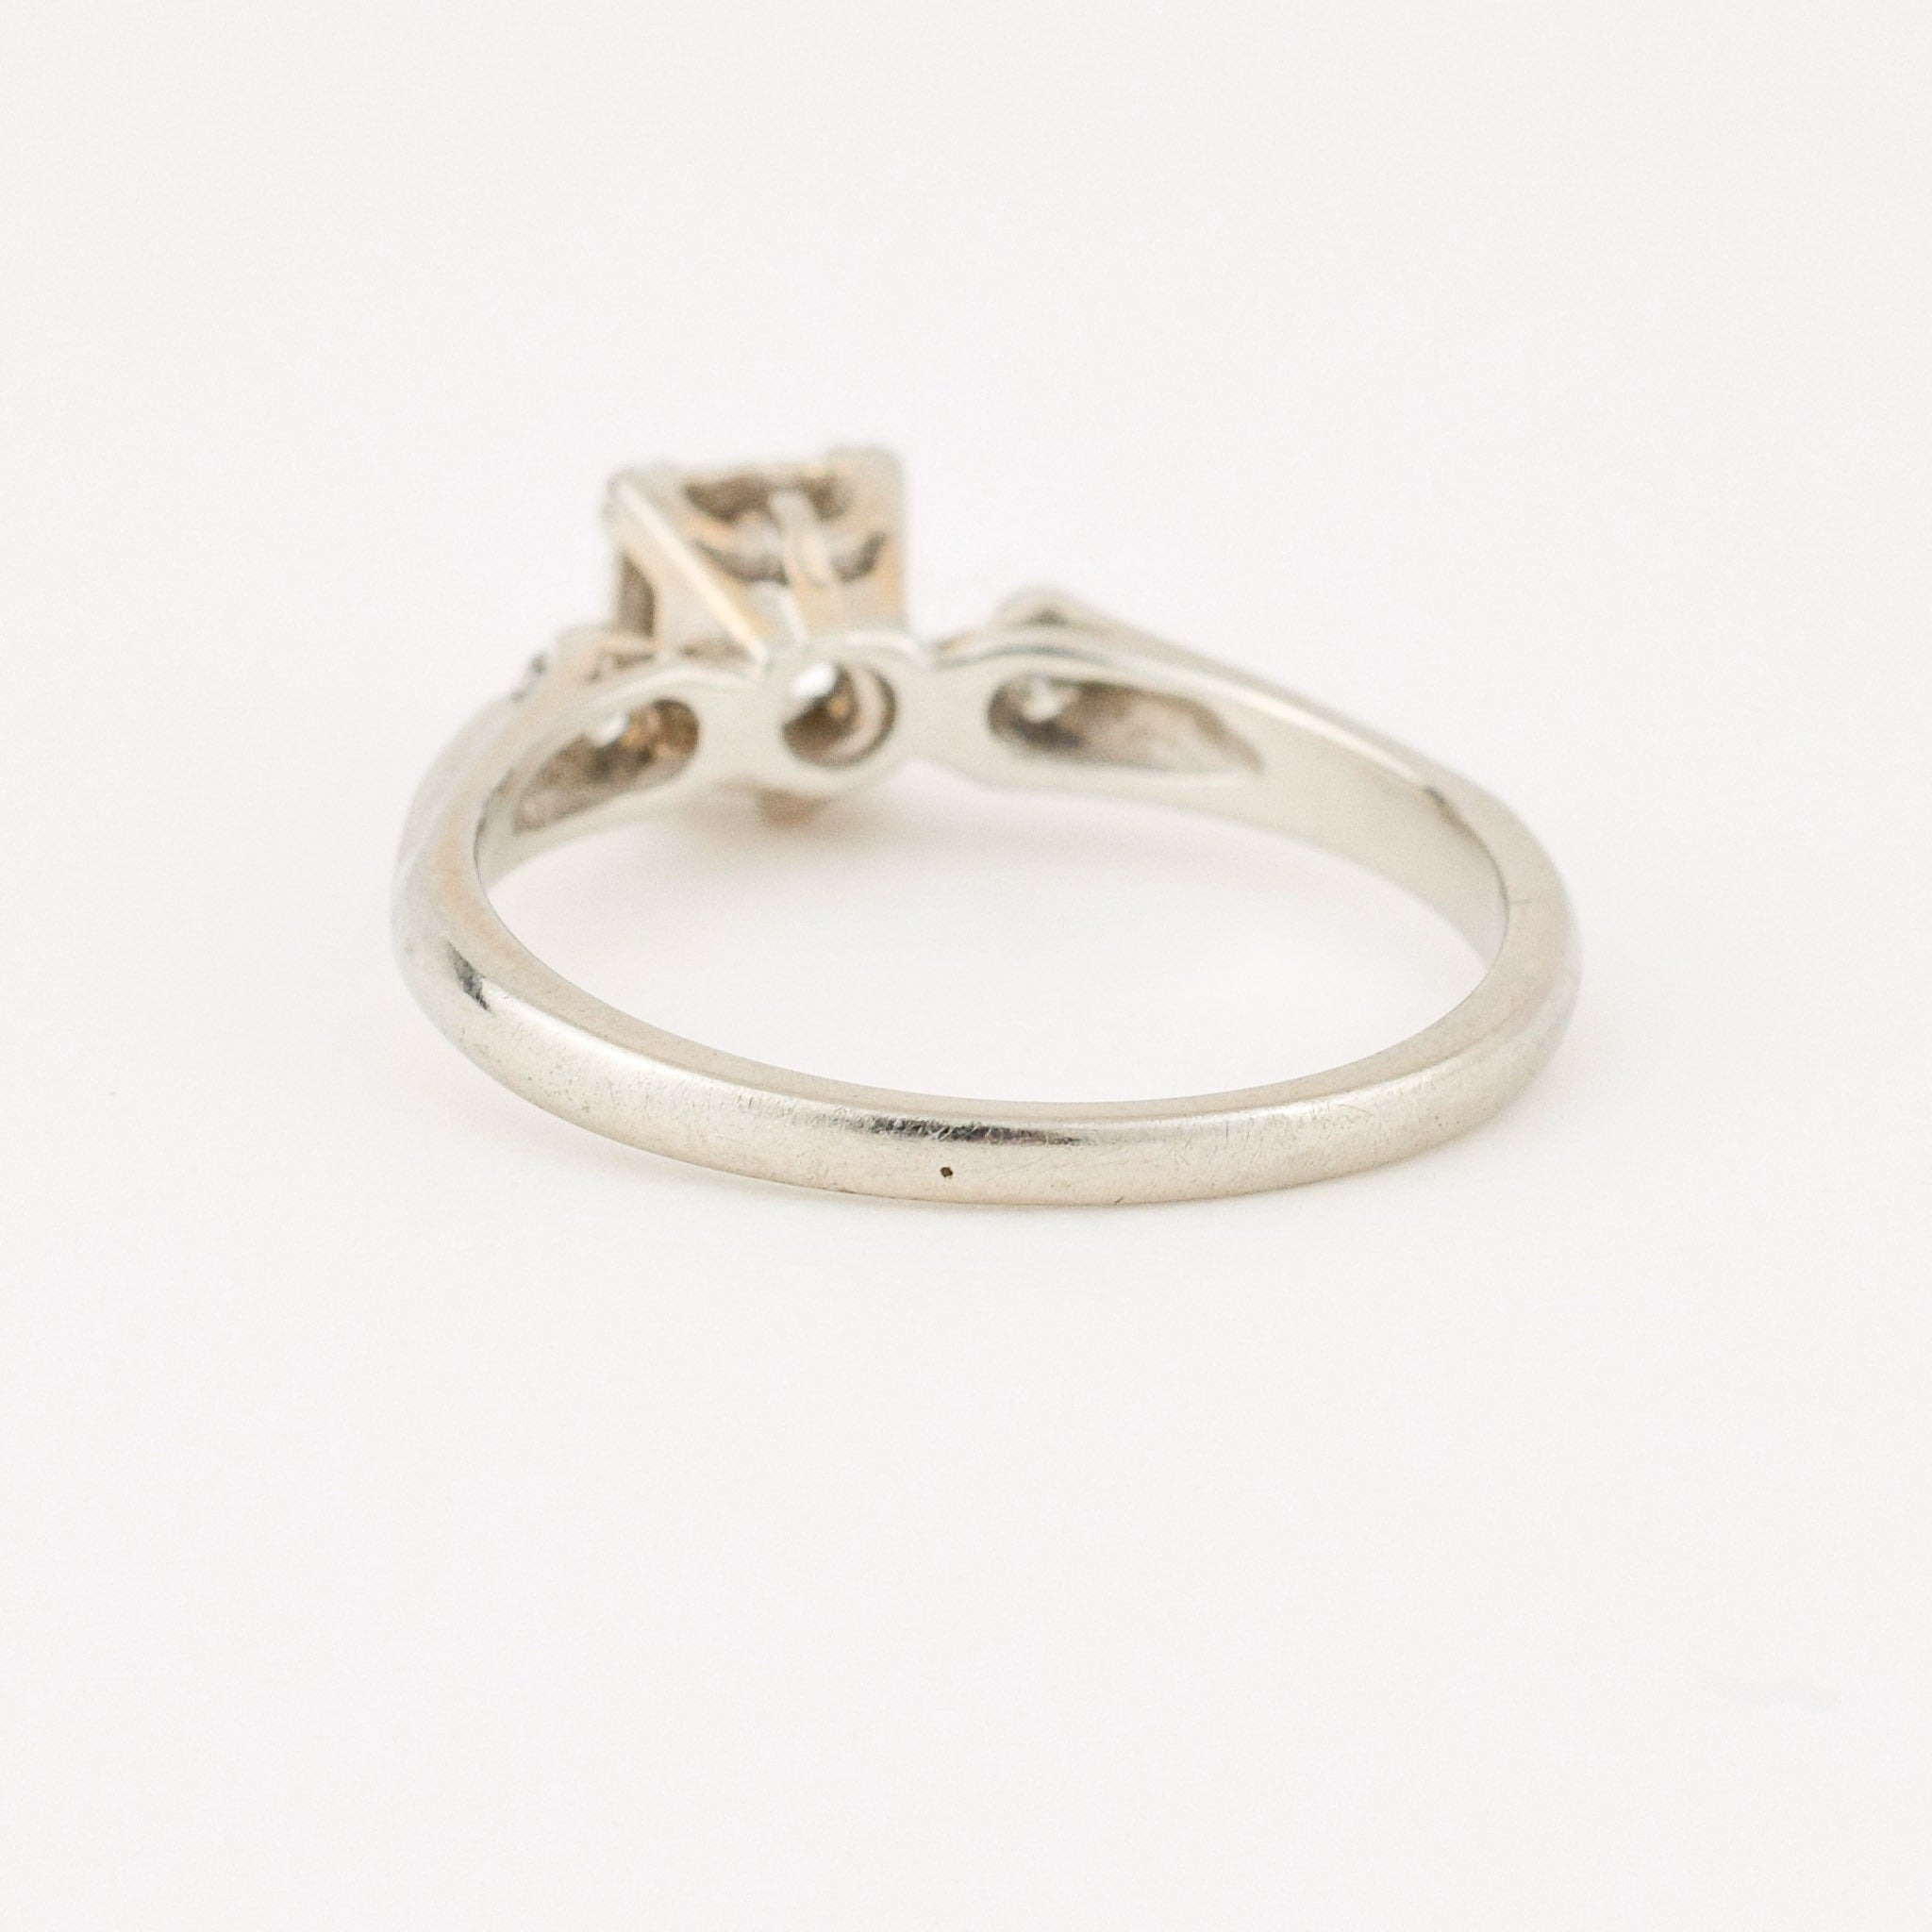 antique old european cut diamond engagement ring